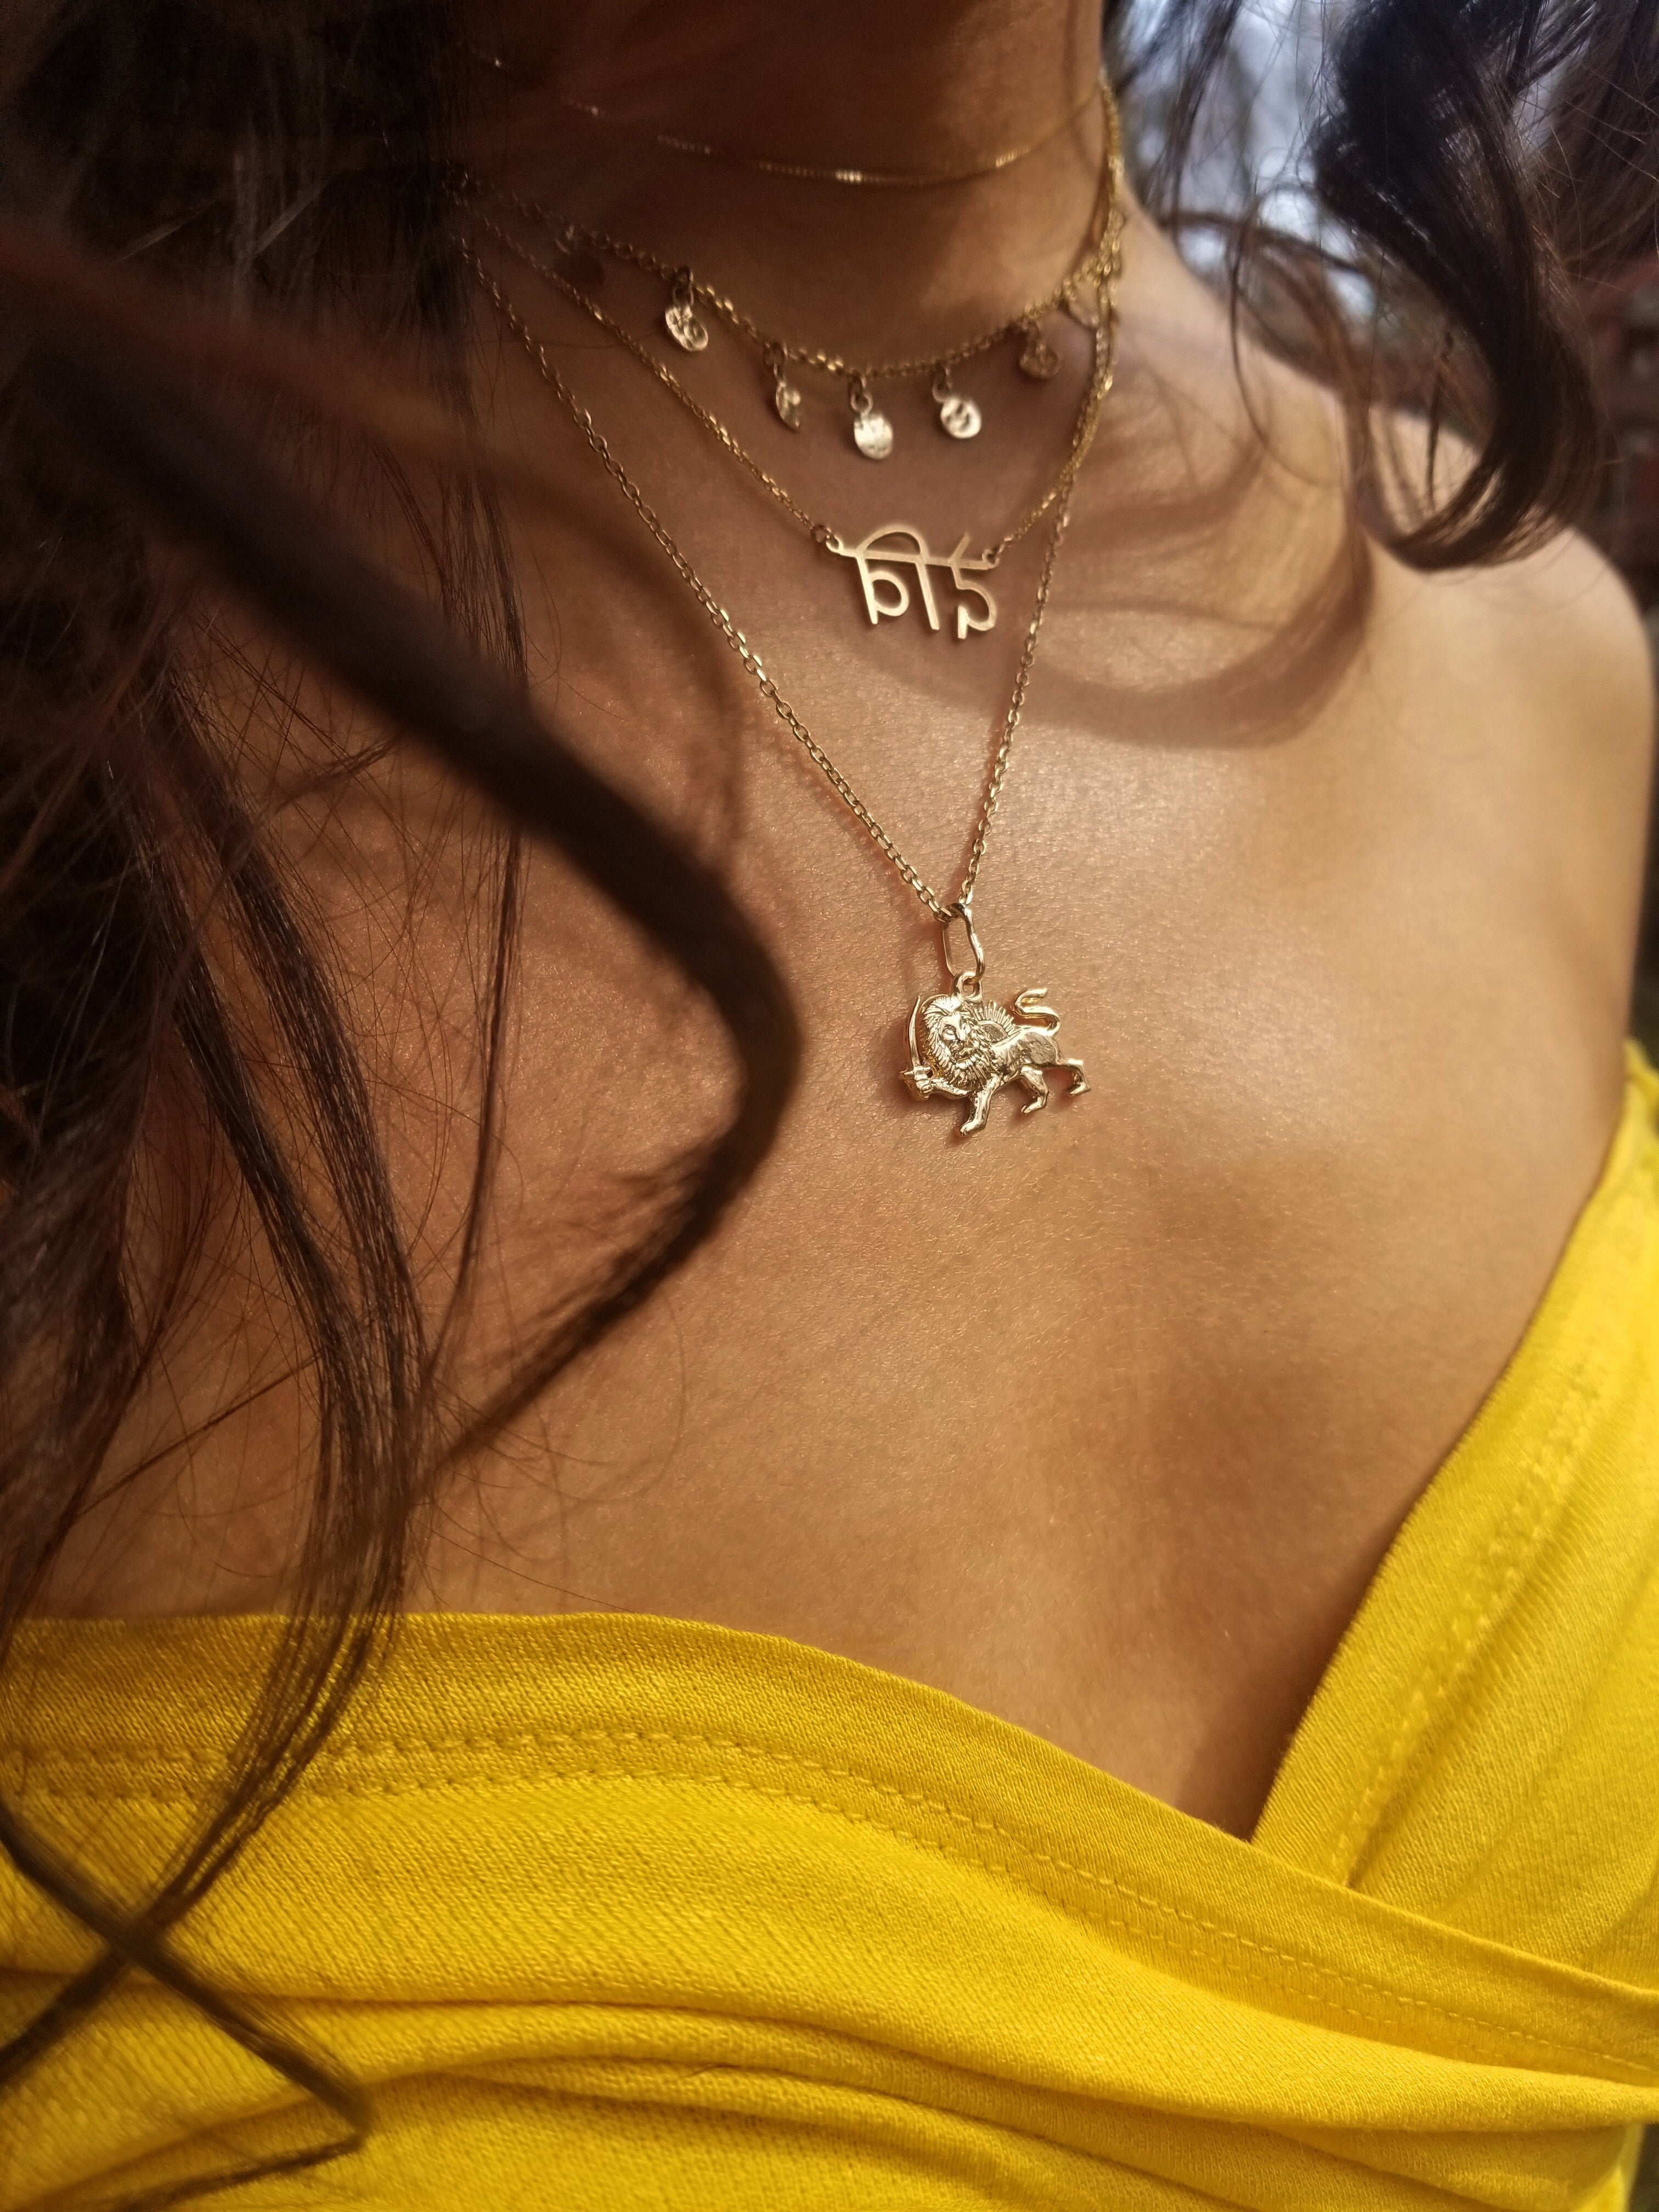 Goddess Sanskrit Necklace